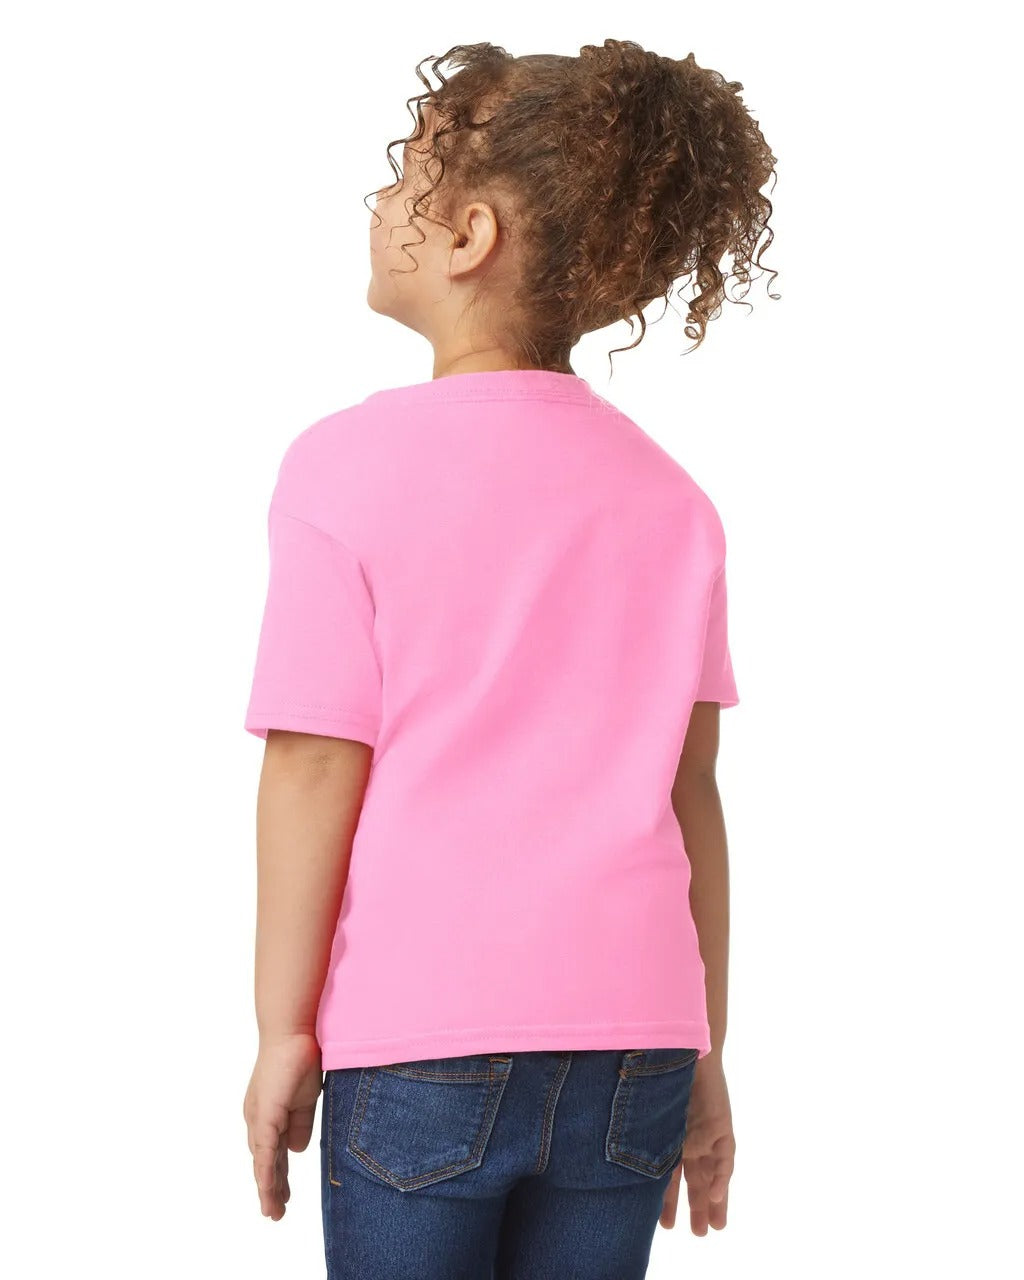 Toddlers Tshirt - Light Pink